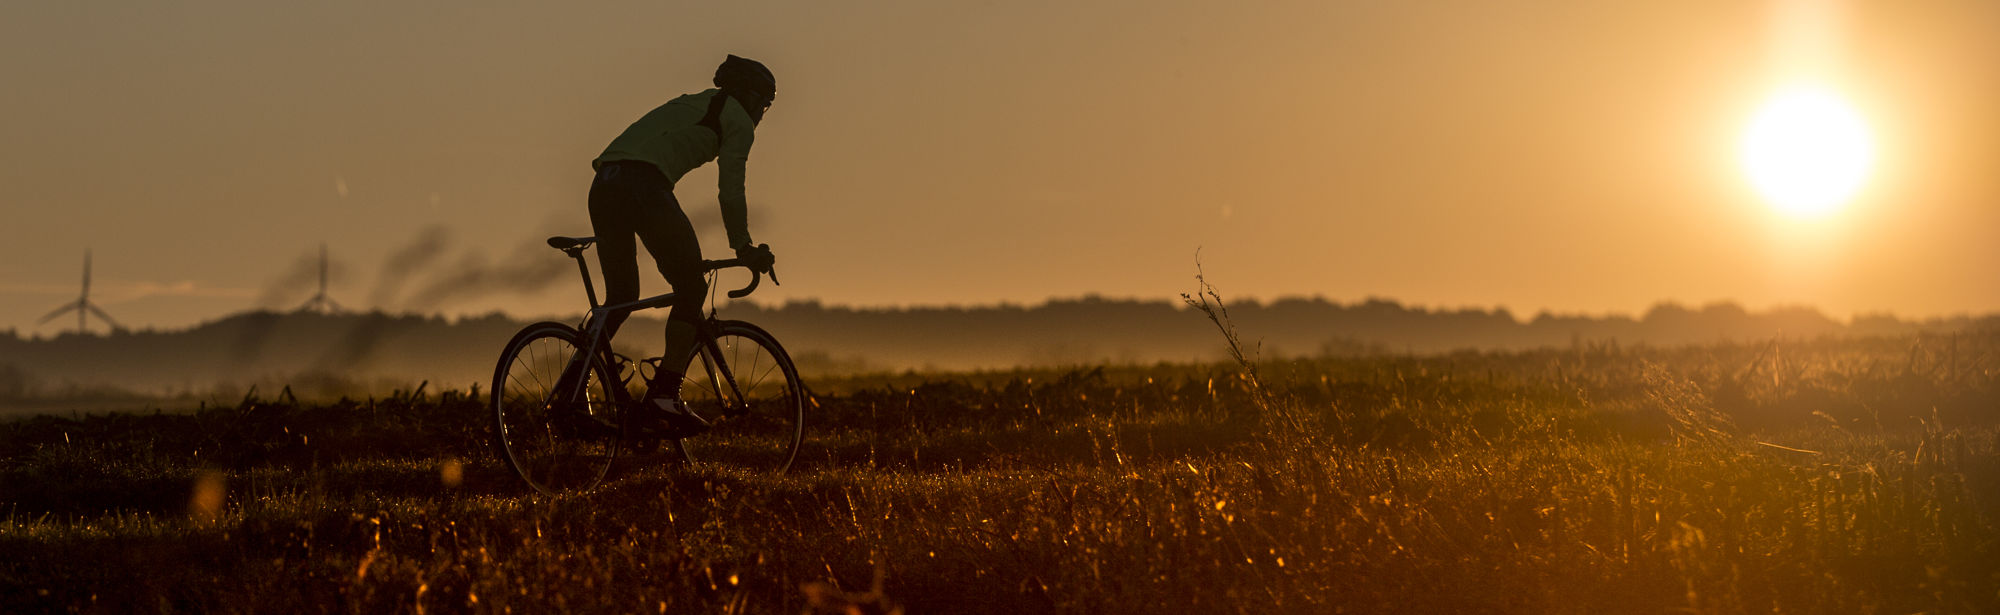 wielrennen zonsondergang veld